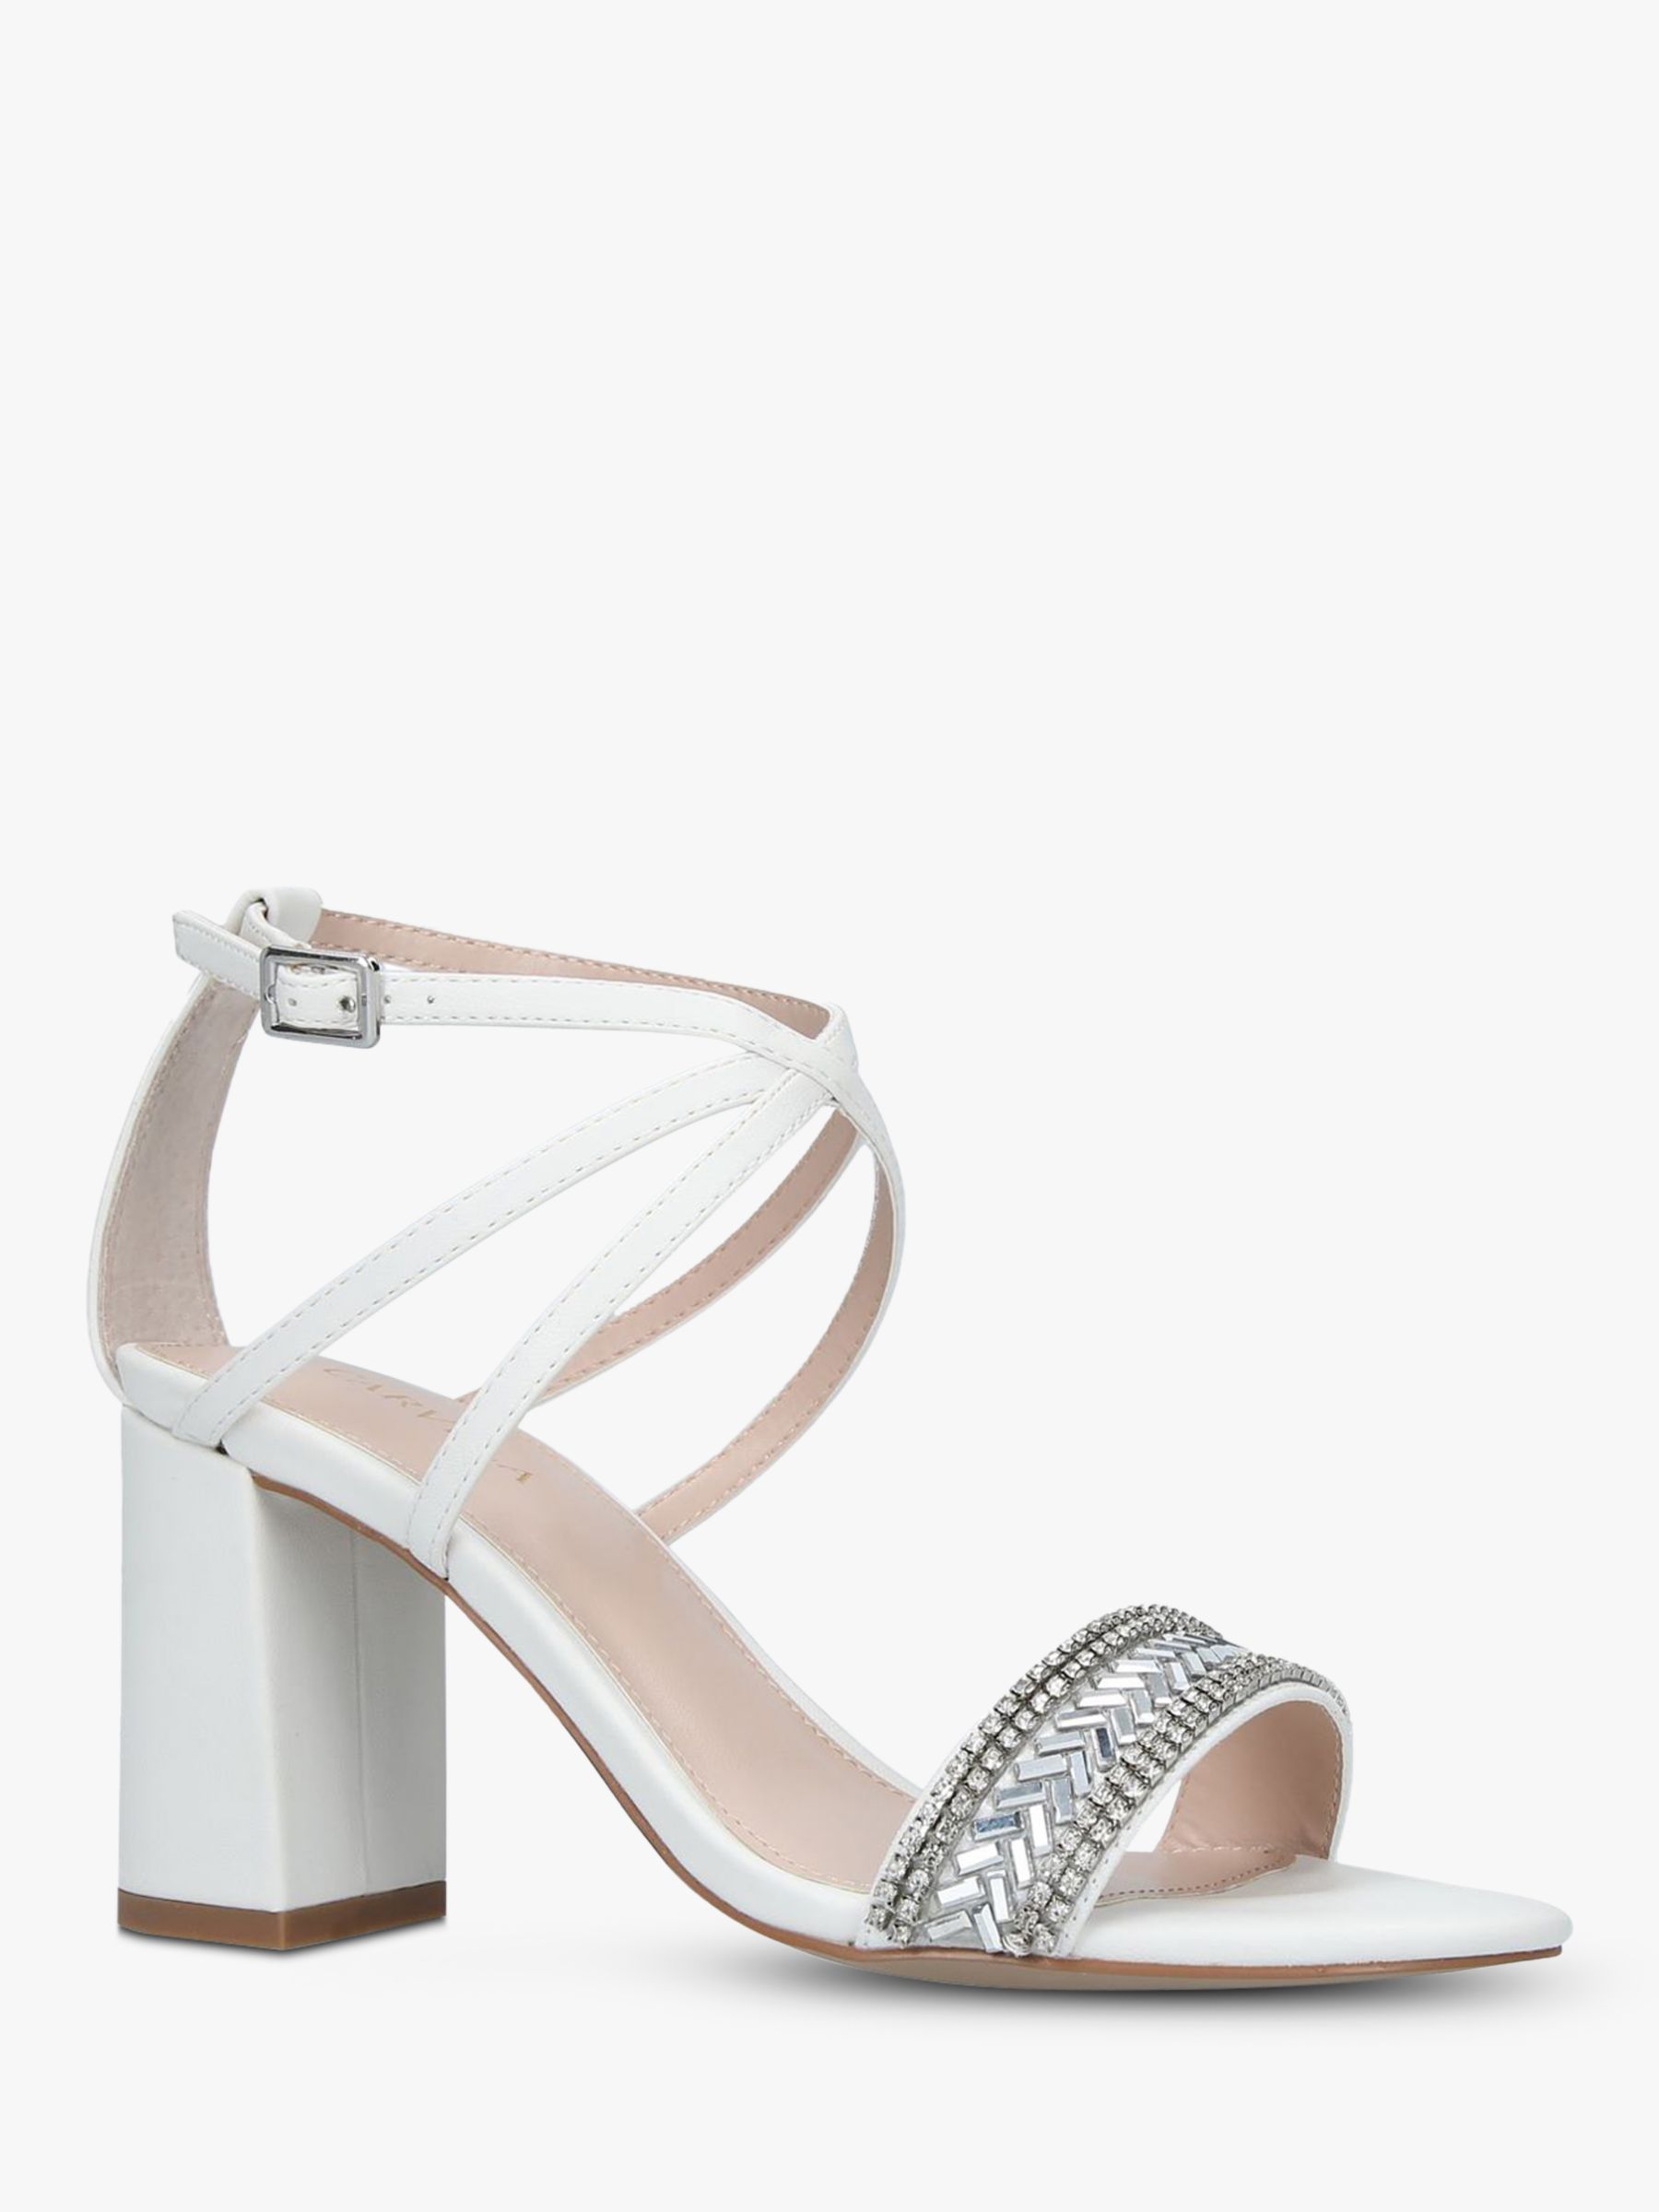 carvela block heels